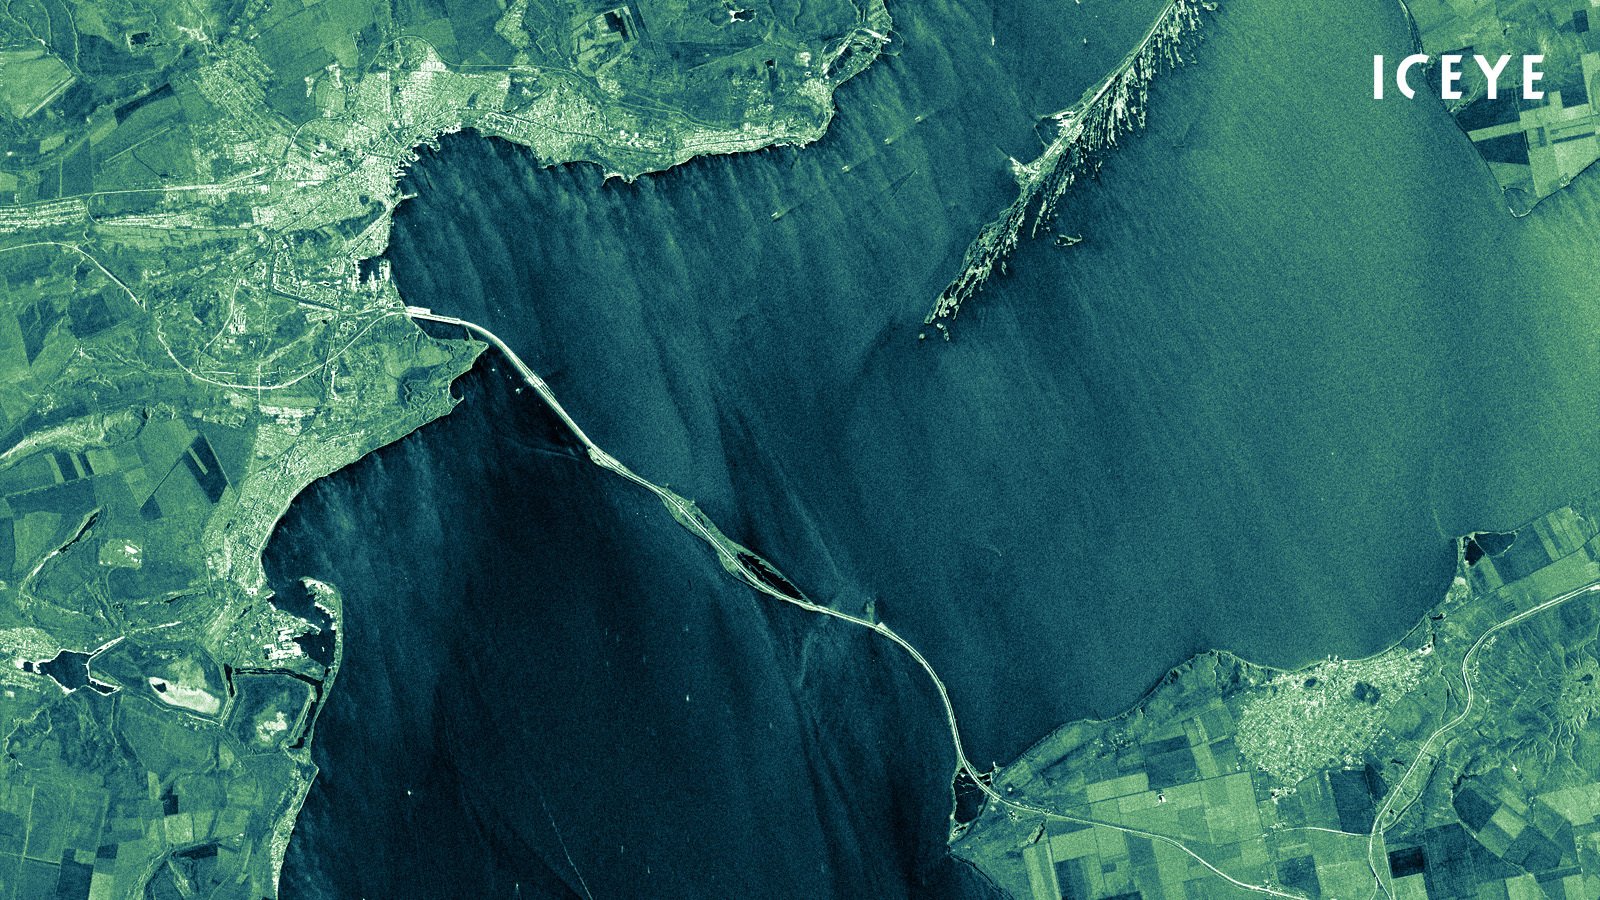 ICEYE SAR satellite image of Crimean bridge (Kerch Strait Bridge or Kerch Bridge) that connects mainland Russia with Crimea.